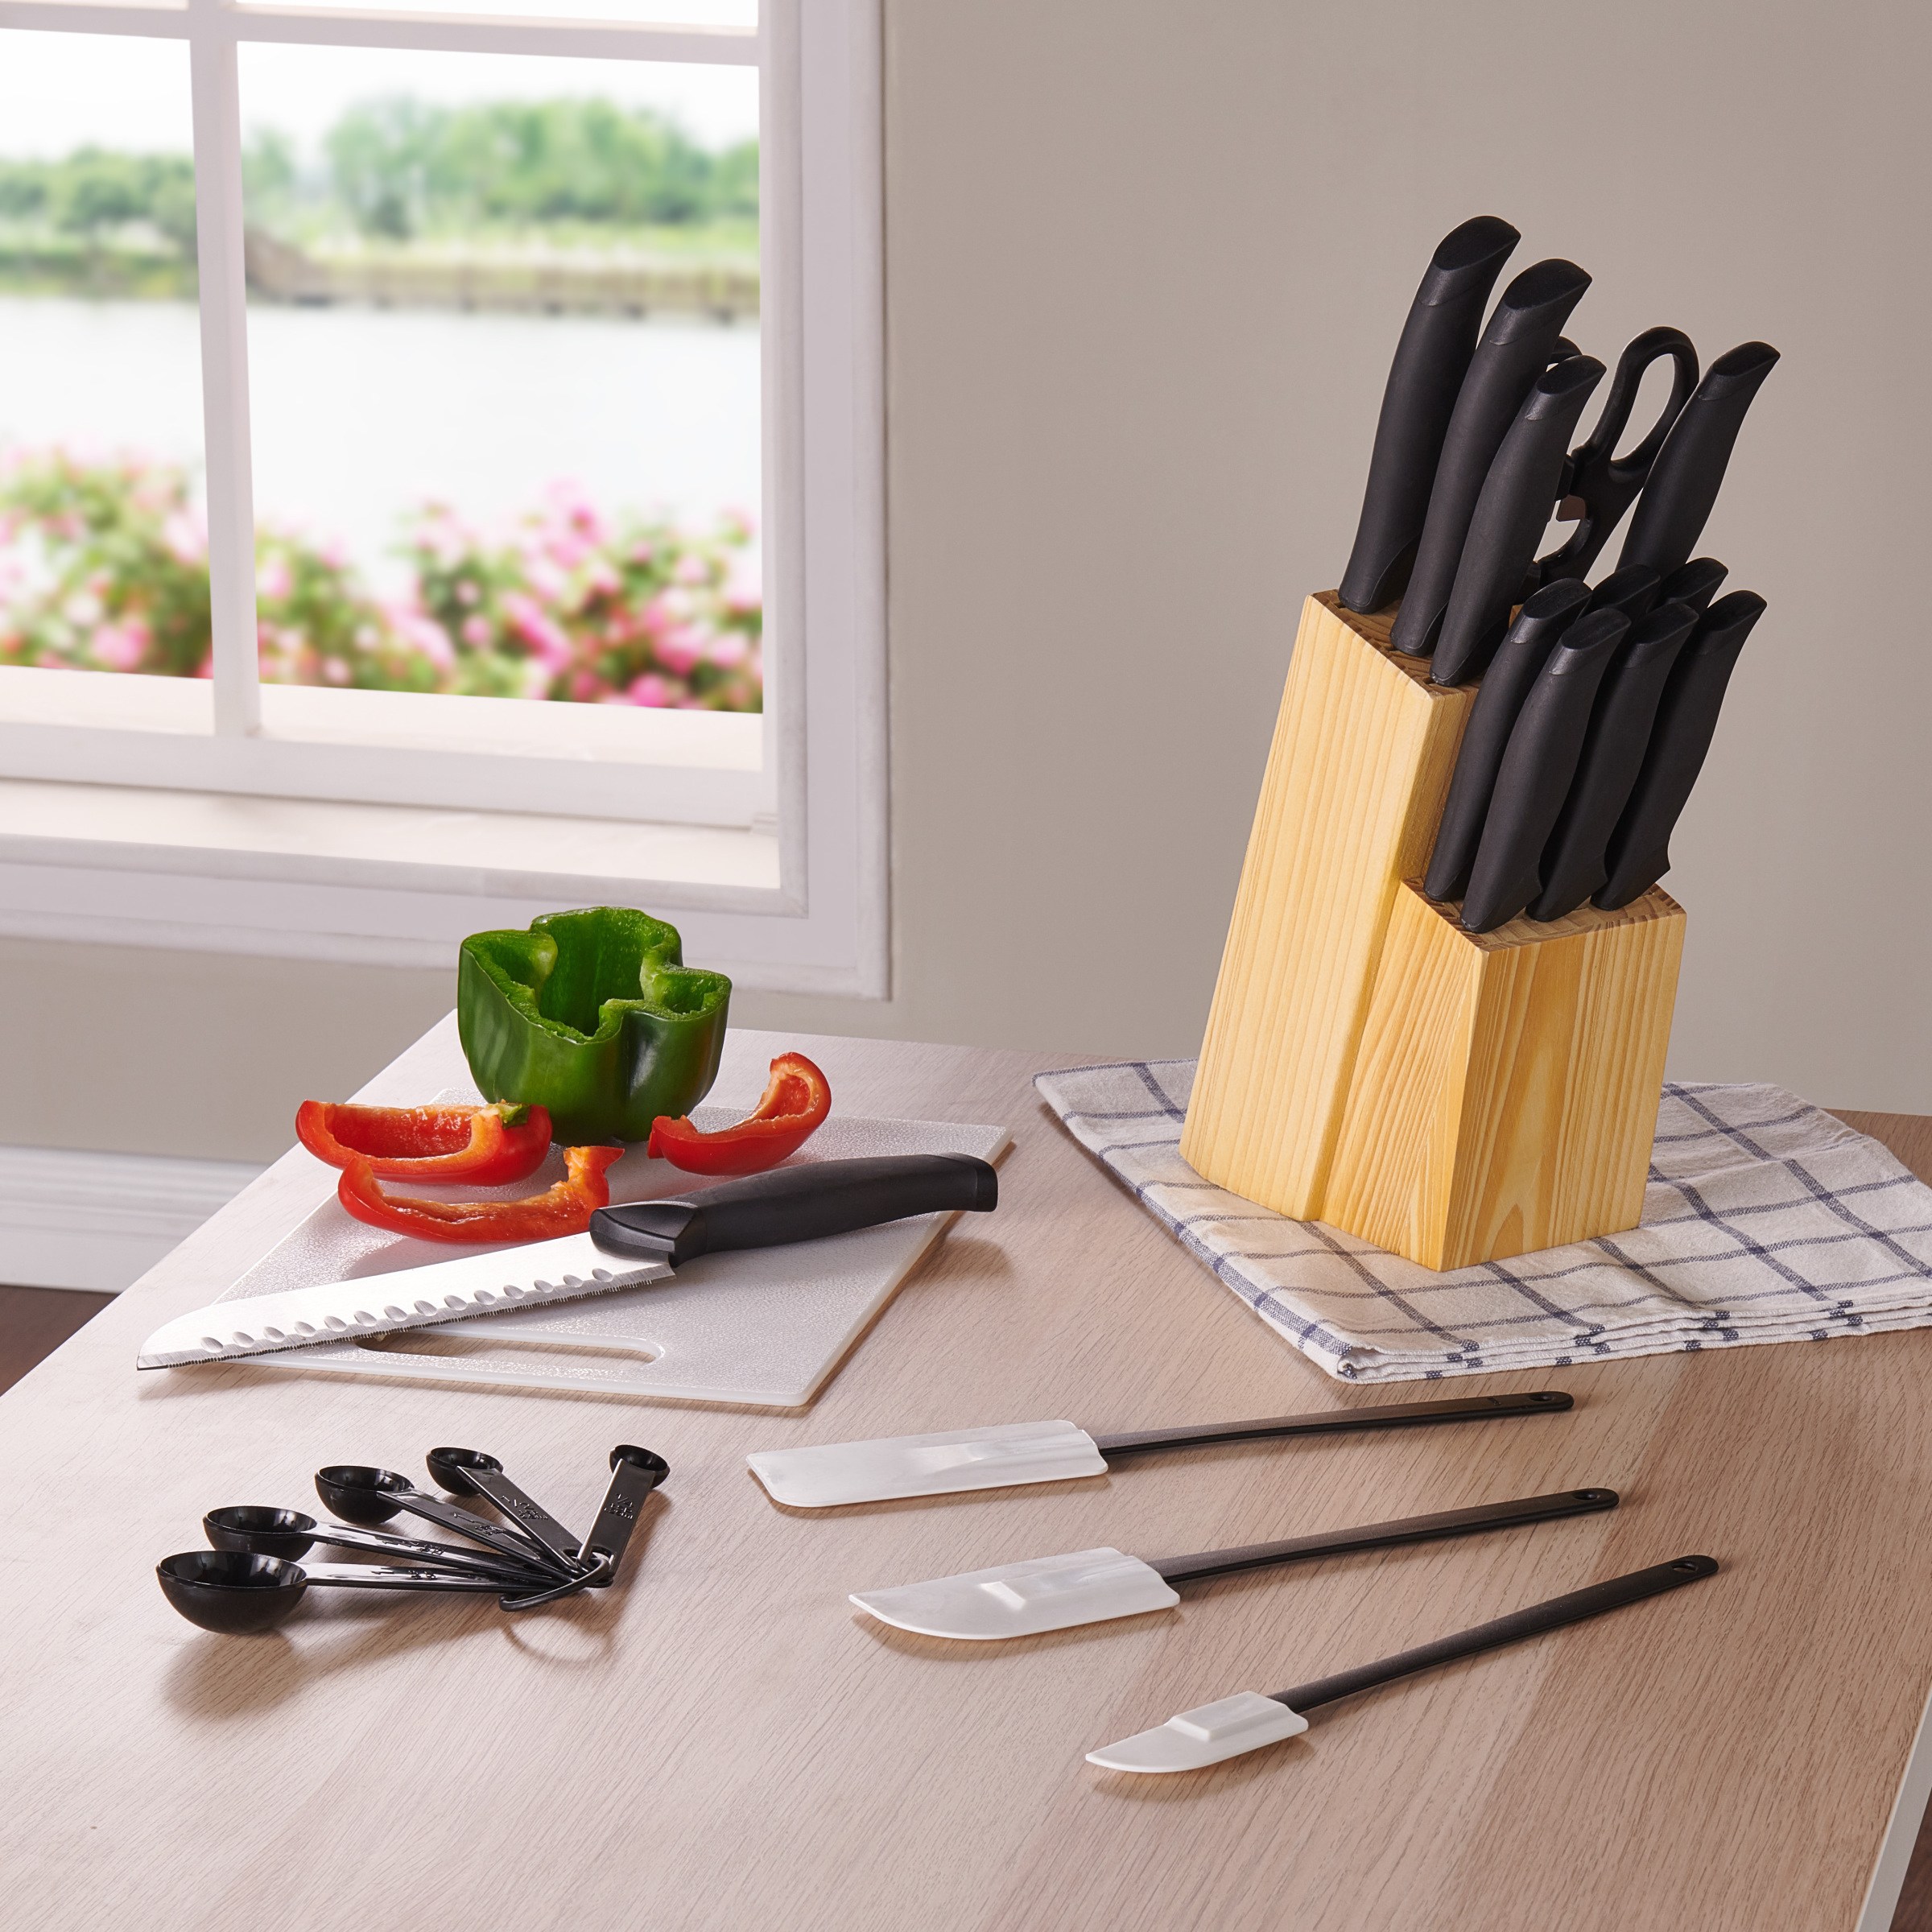 Mainstays Kitchen Cutlery & Gadget Set, 23 Piece - image 5 of 12